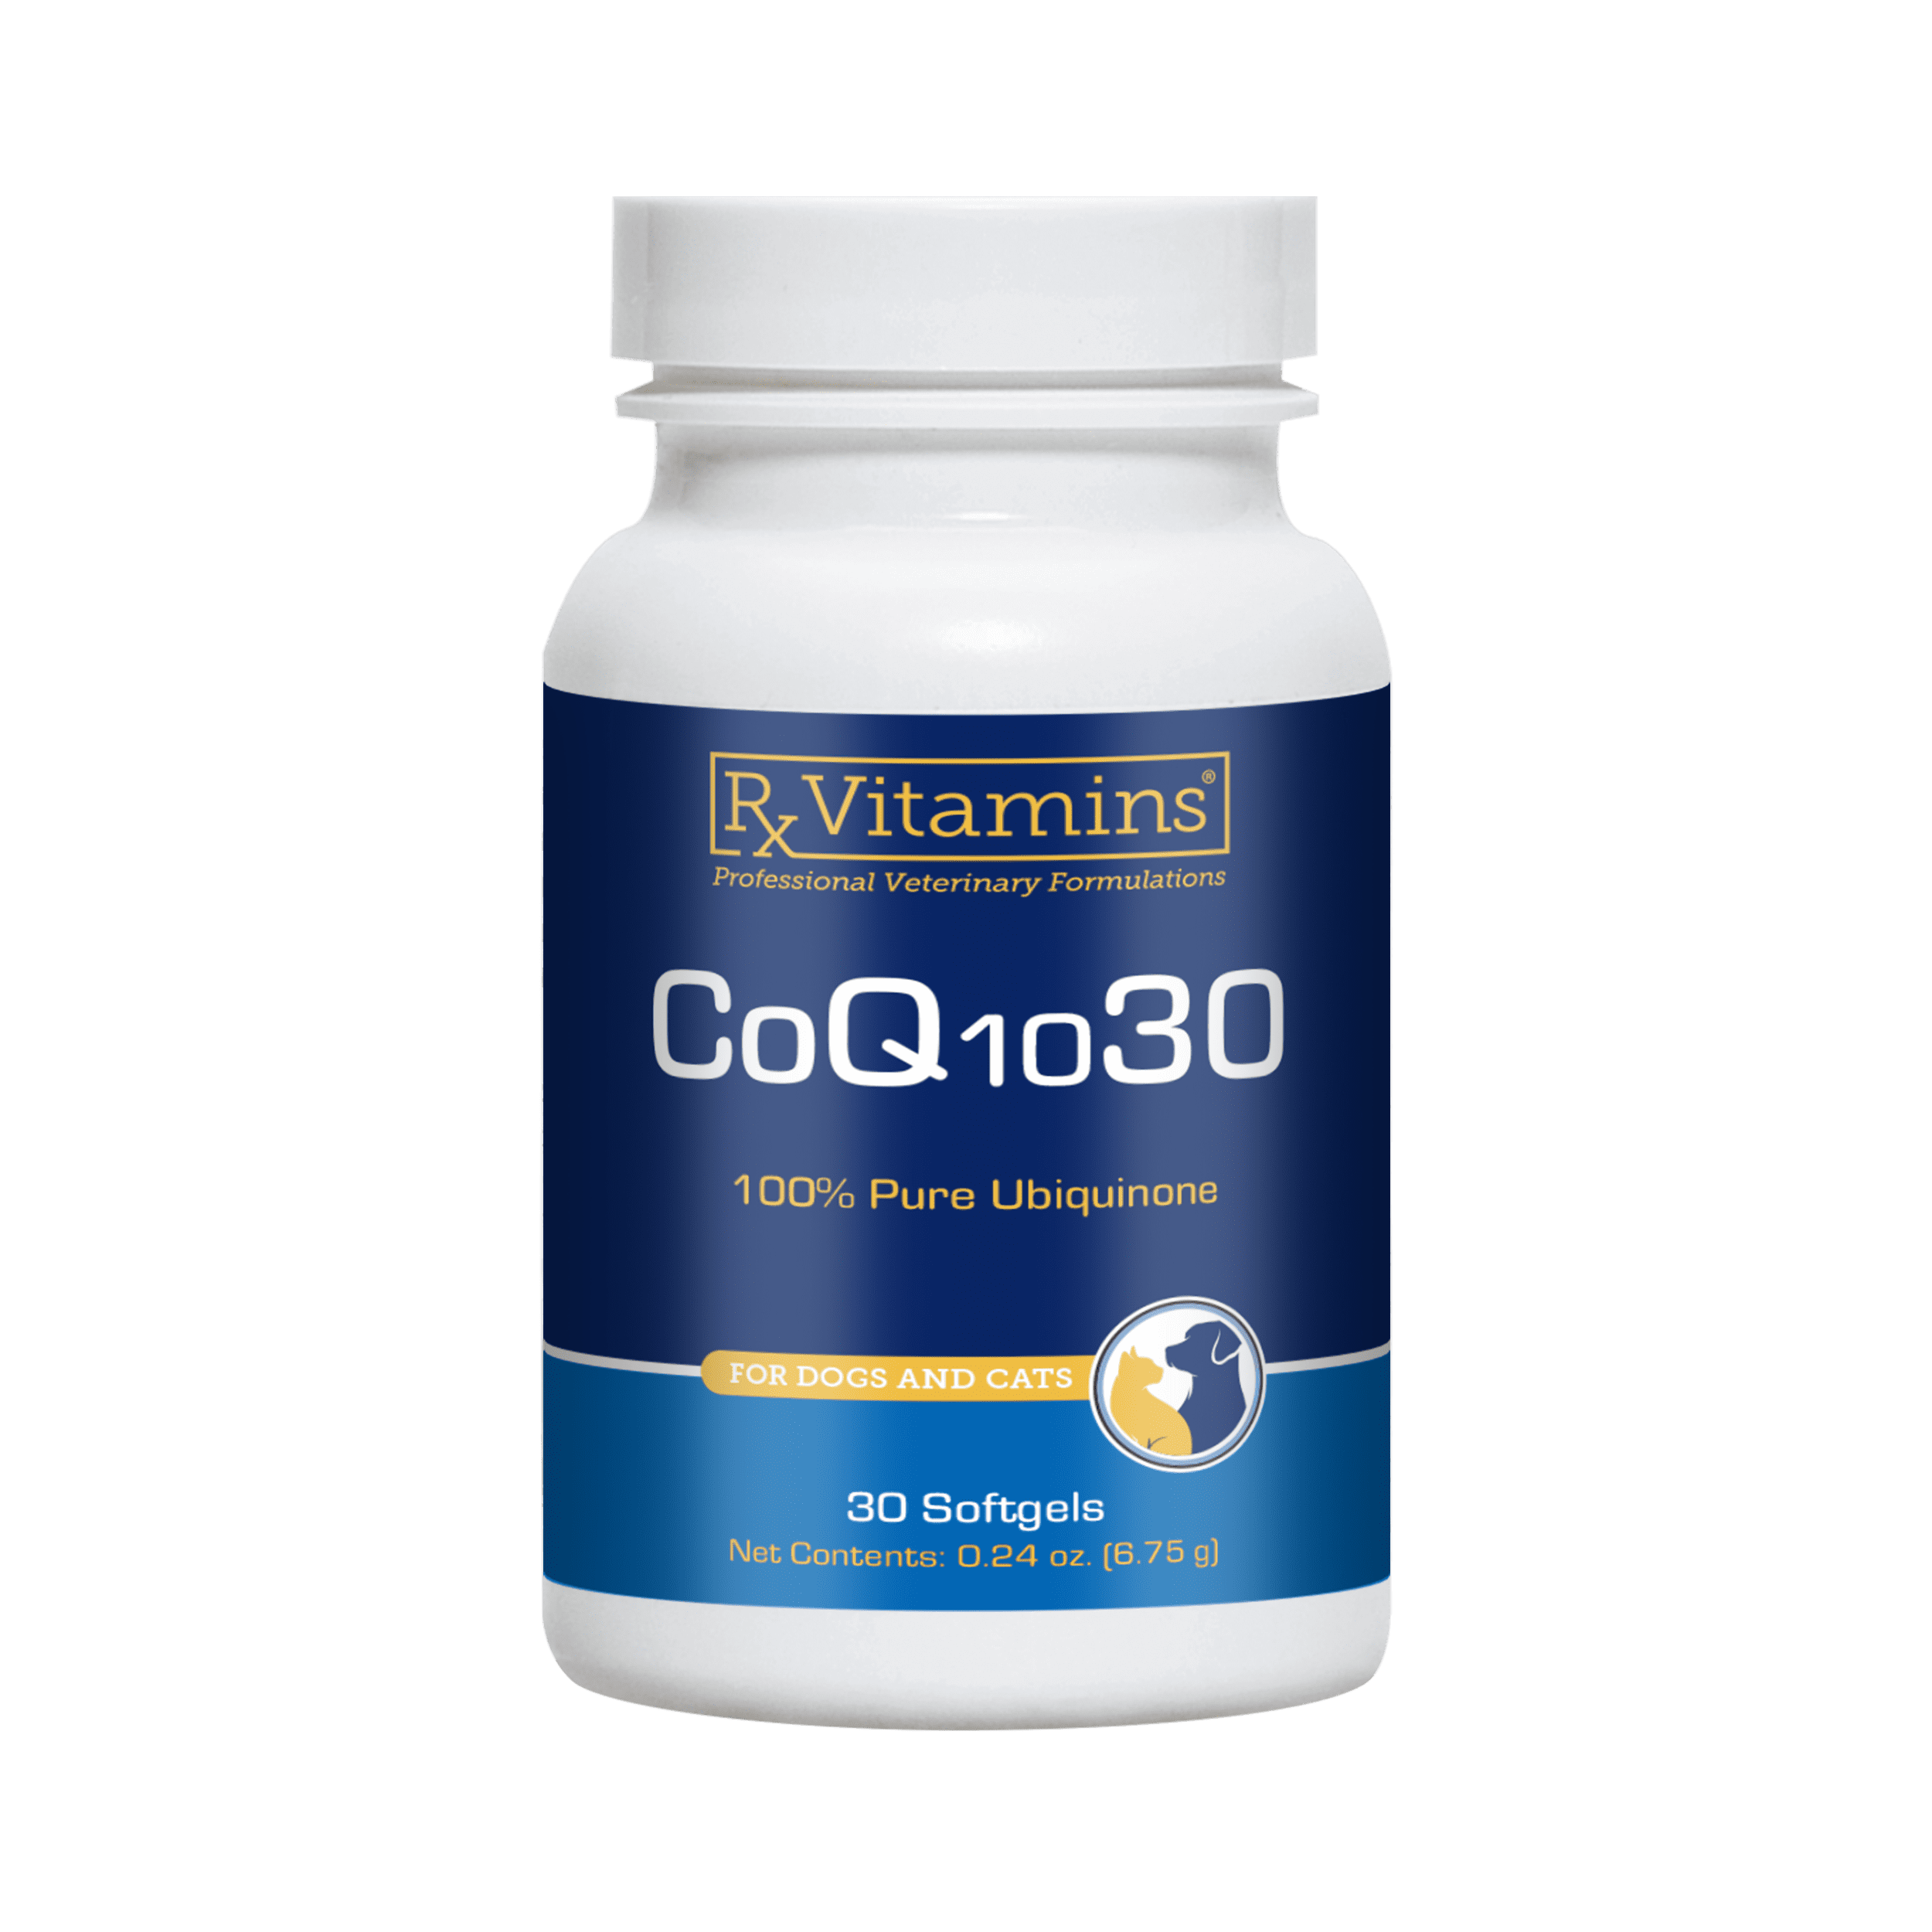 Rx Vitamins CoQ10